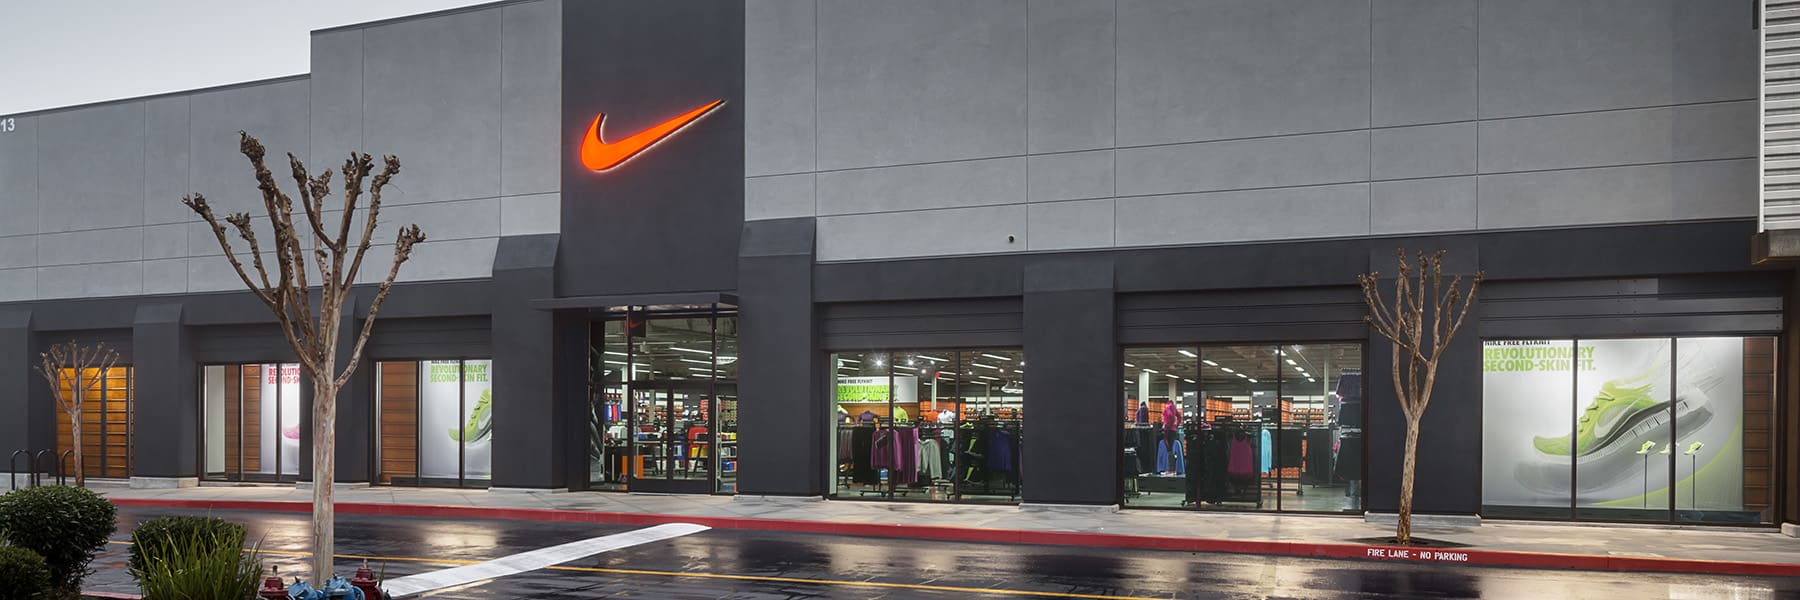 Gárgaras balsa En contra Nike Factory Store - San Jose. San Jose, CA. Nike.com